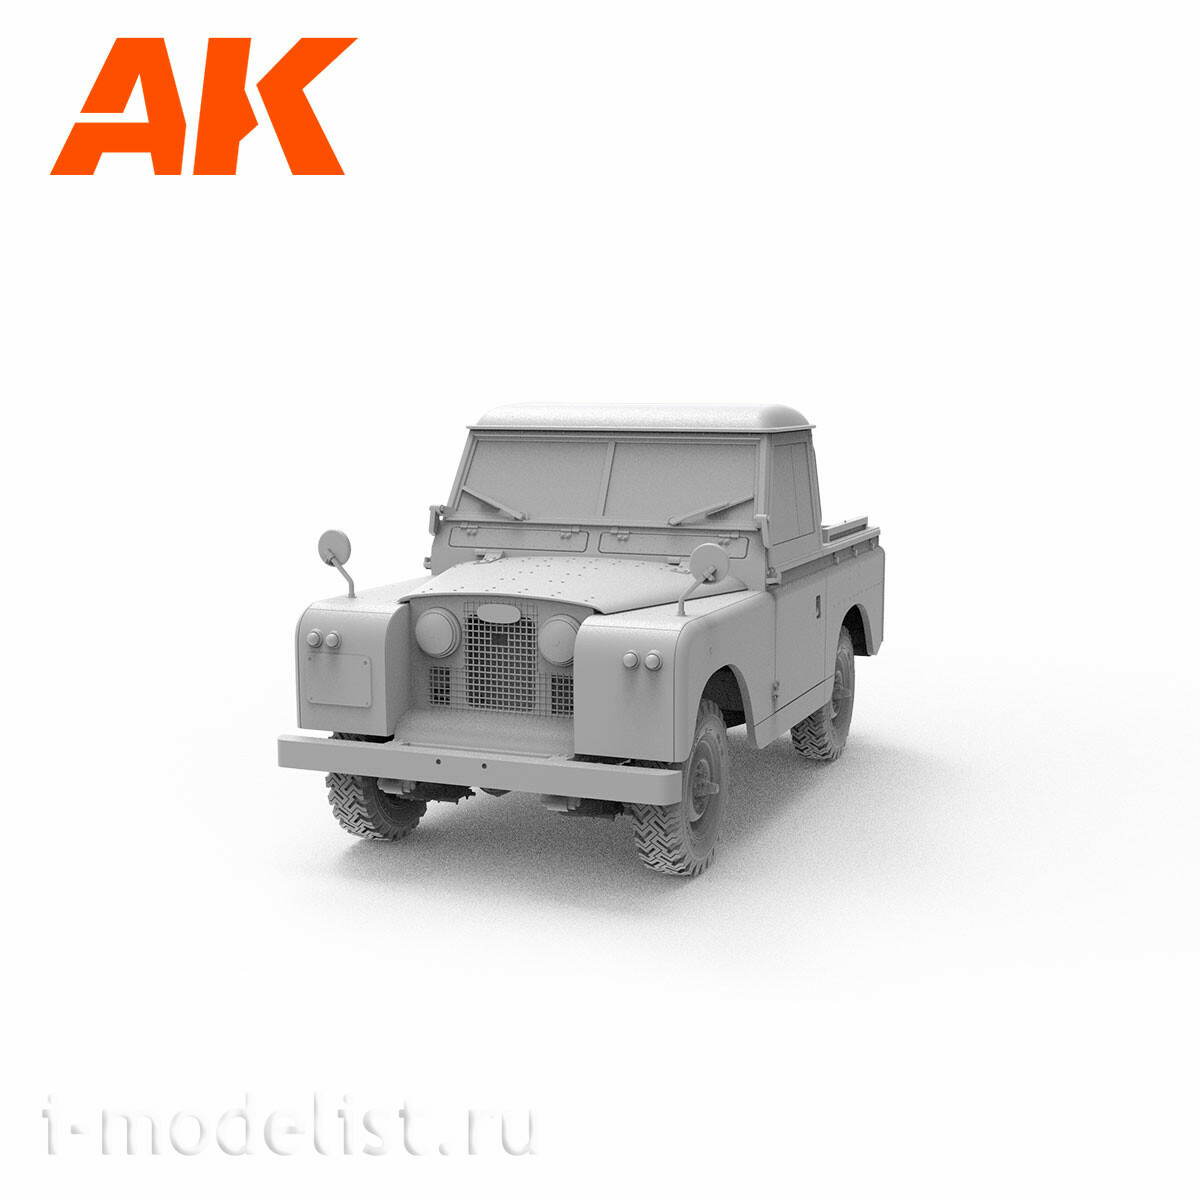 AK35014 AK Interactive 1/35 SUV Land Rover 88 Series IIA Tow Truck